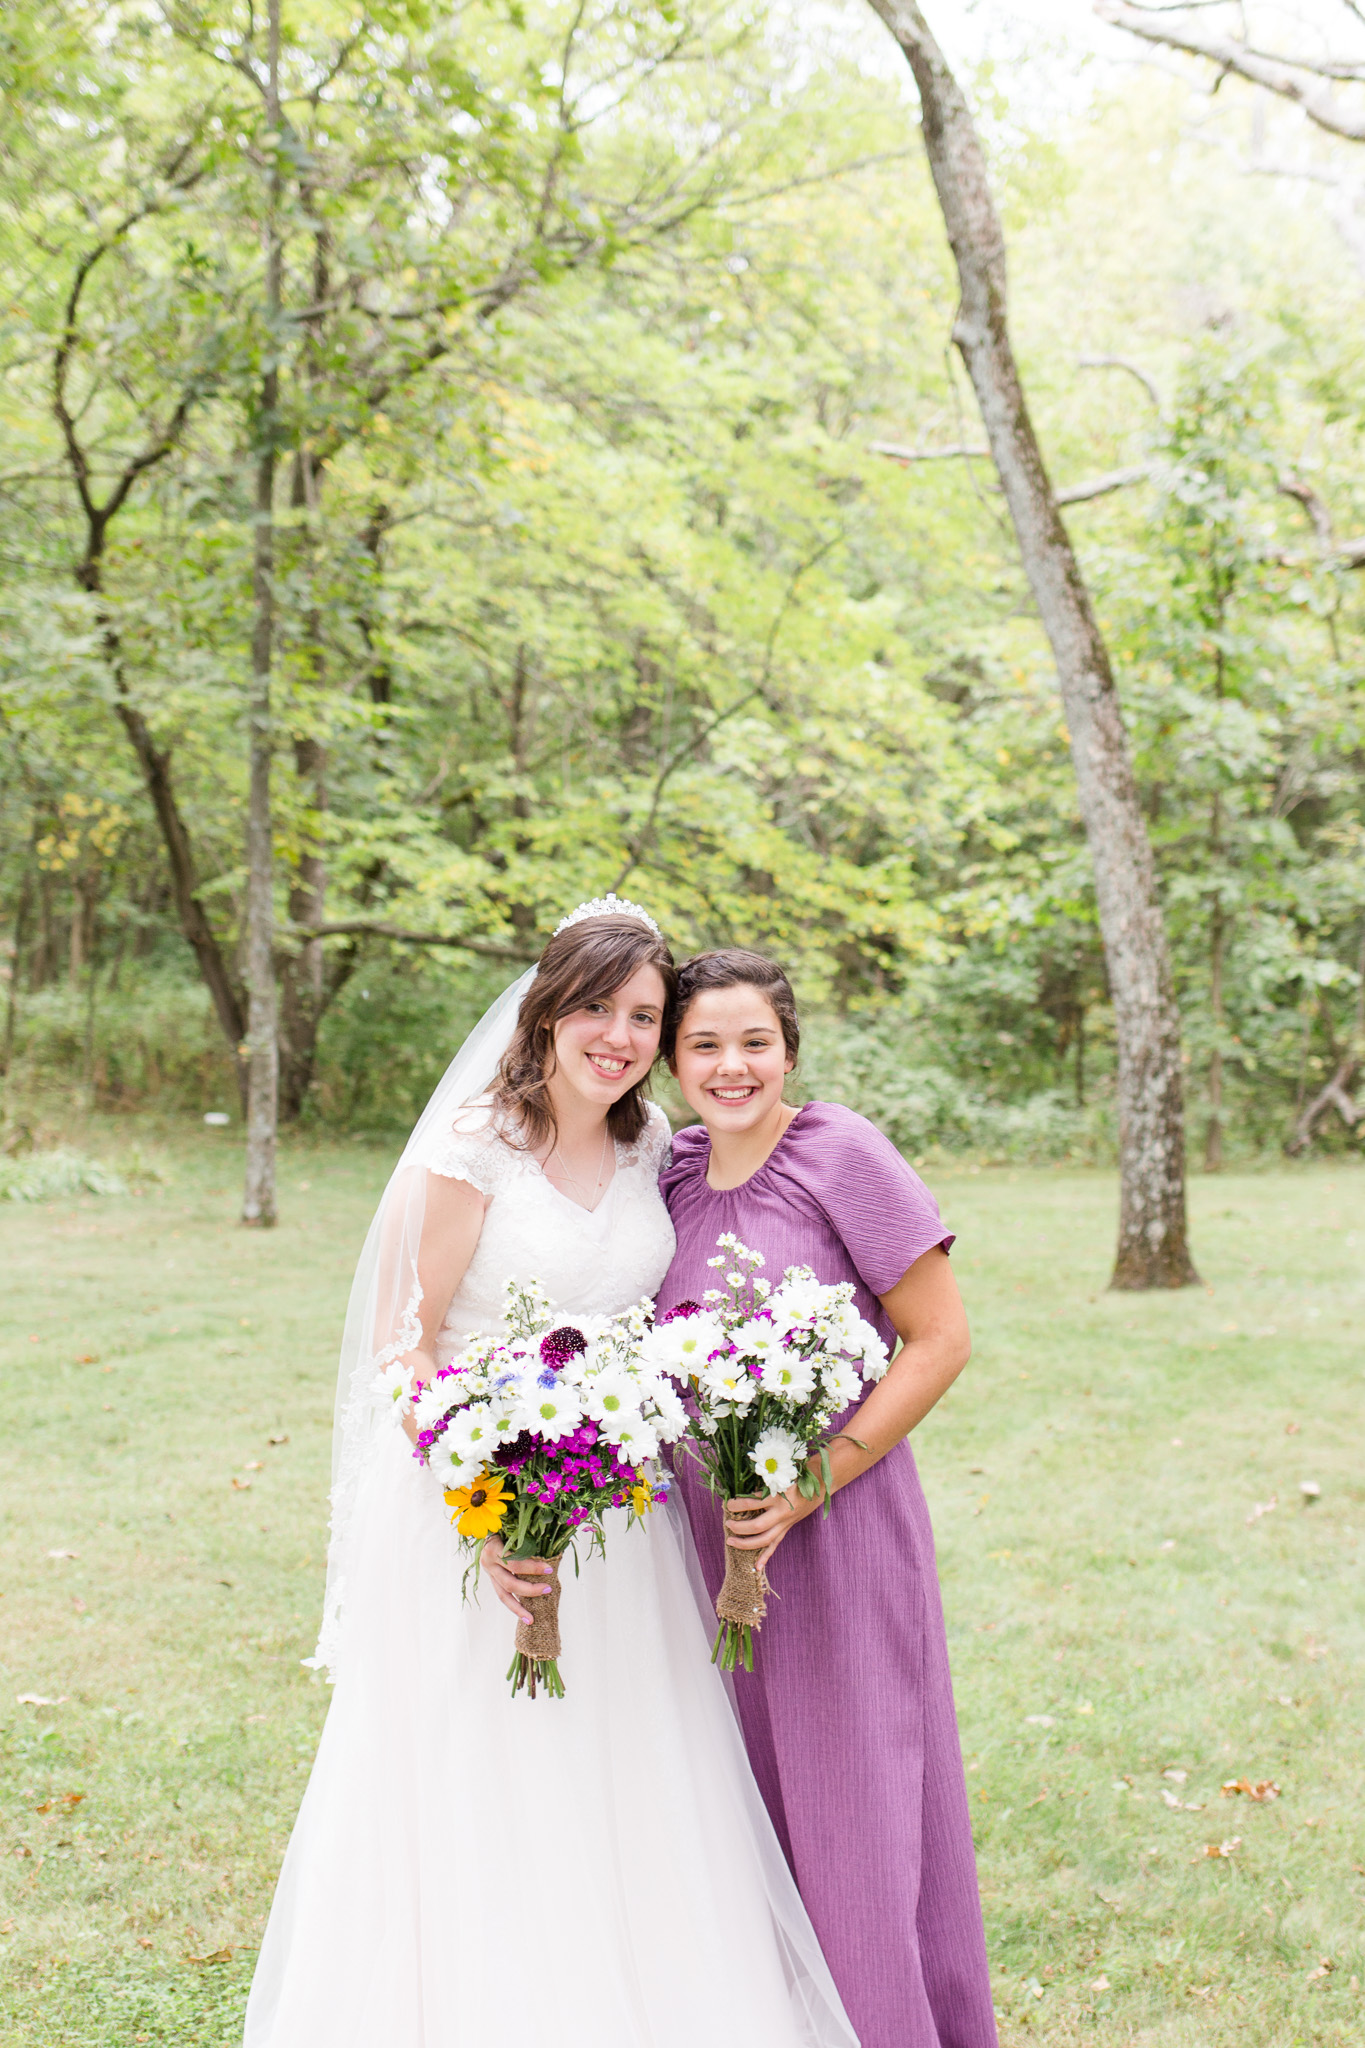 Beaded lace blush bride's wedding dress and purple bridesmaid dress